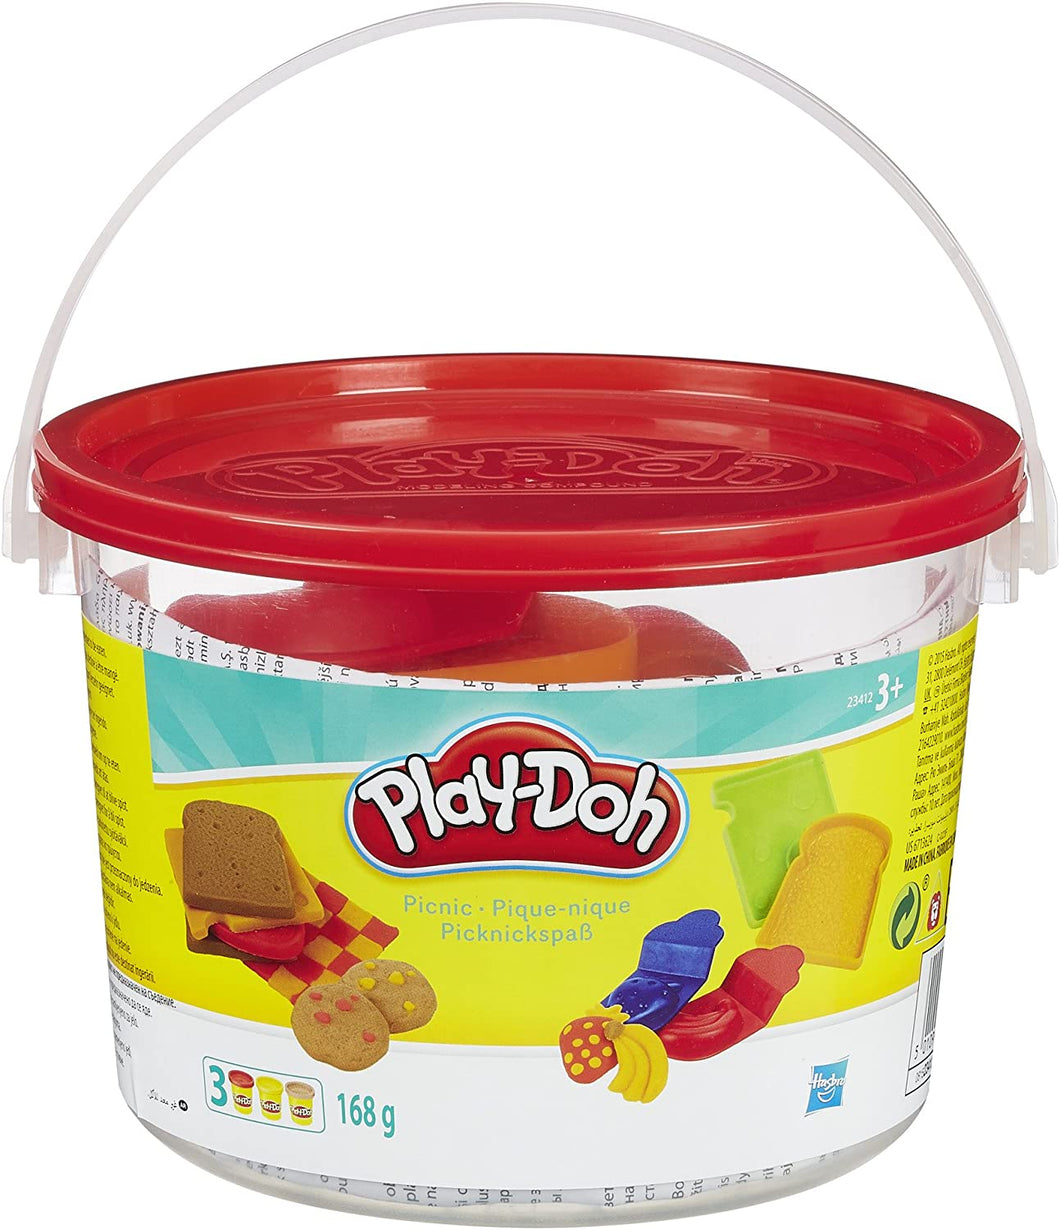 Play-Doh Bucket Picnic